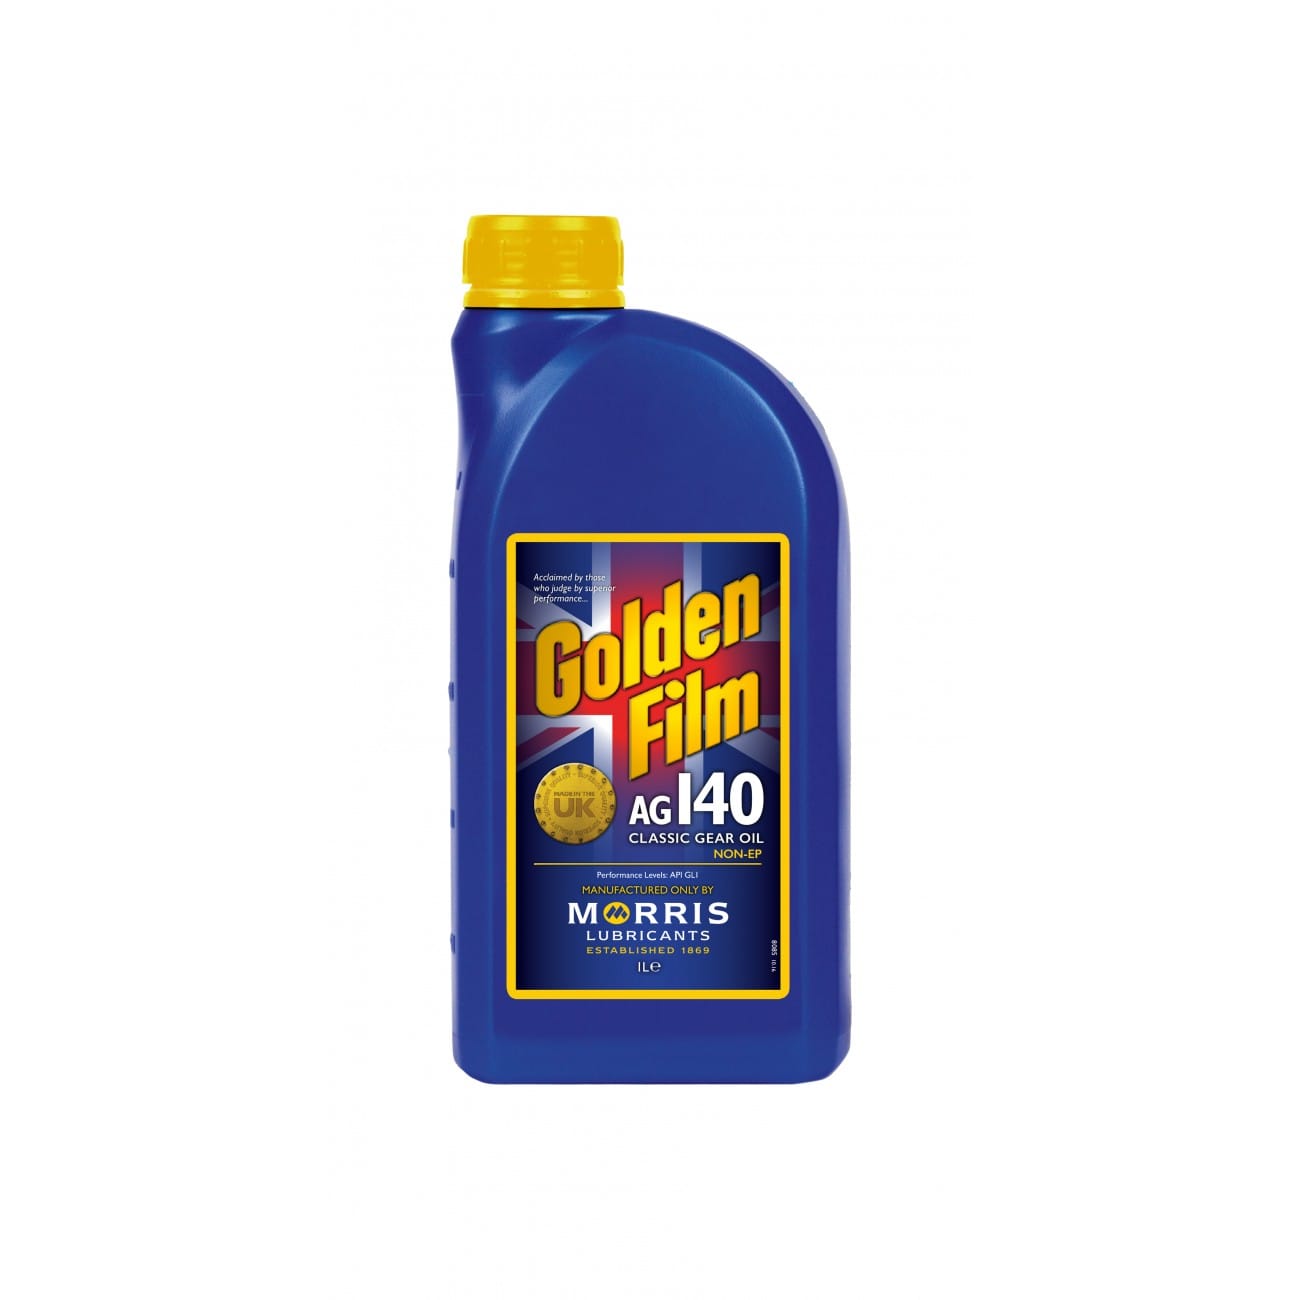 Golden Film AG140 Classic Gear Oil